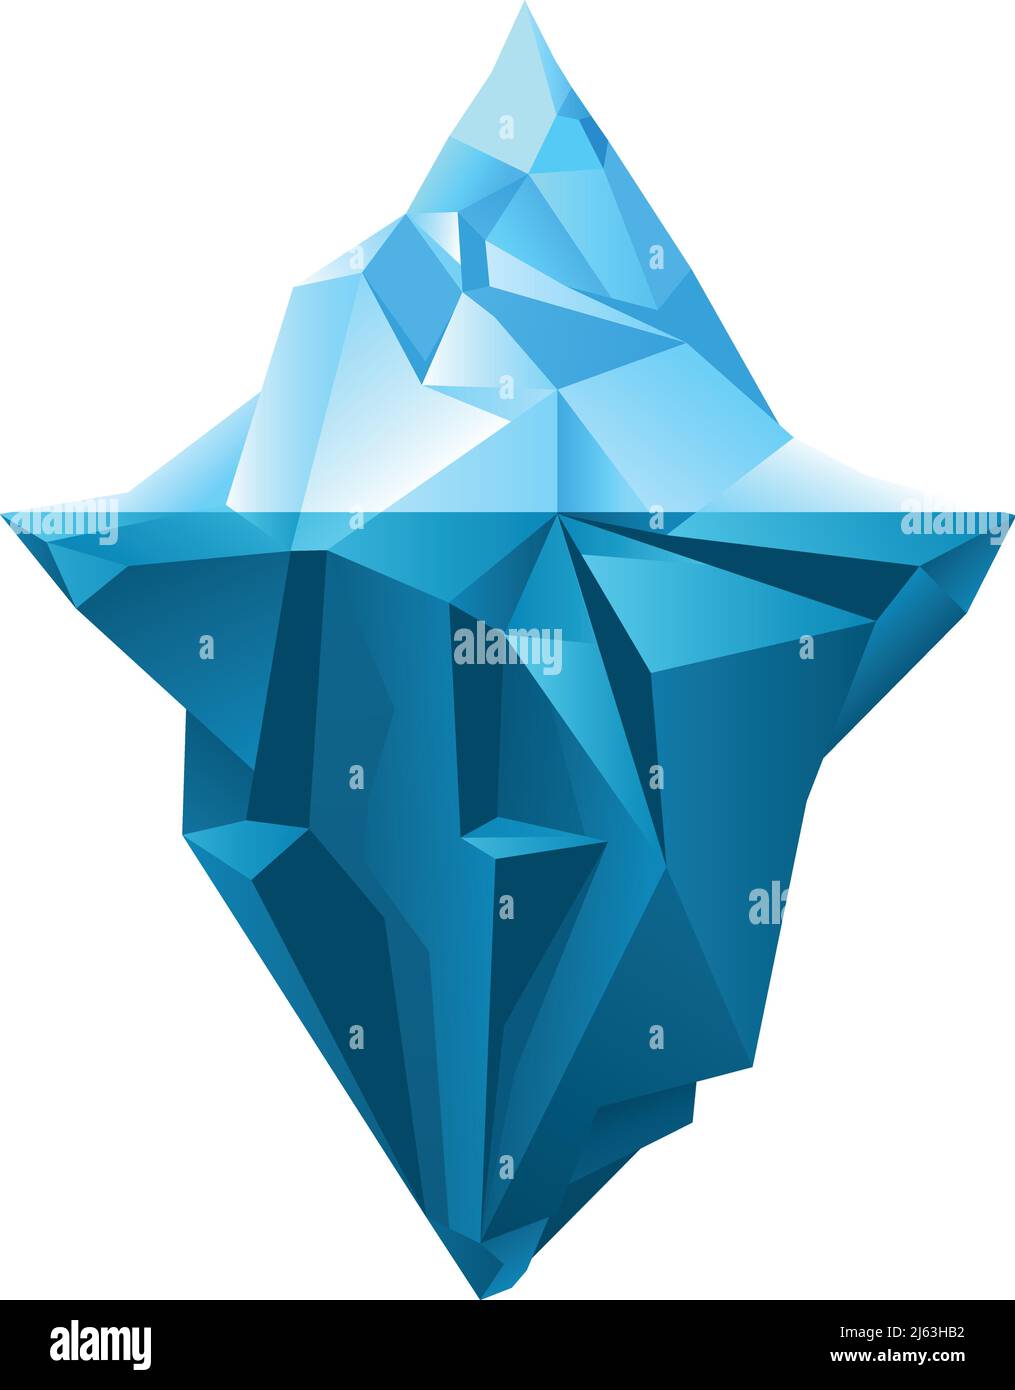 Iceberg icon. Low poly ice mountain logo Stock Vector